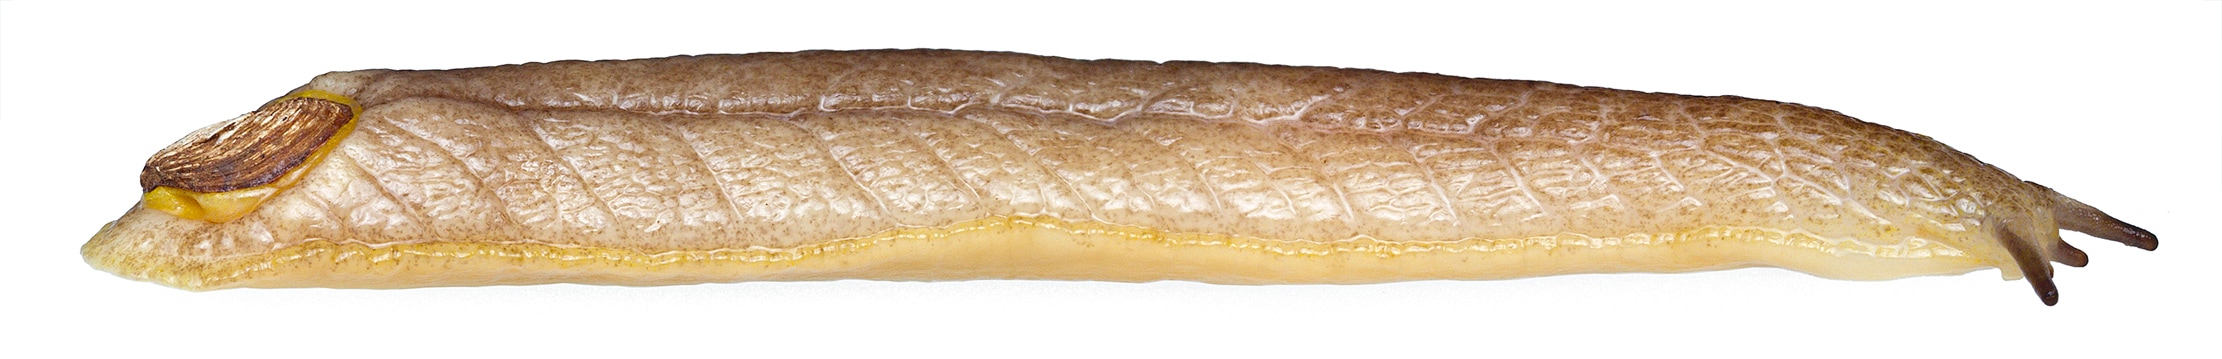 Lateral image of Testacella haliotidea